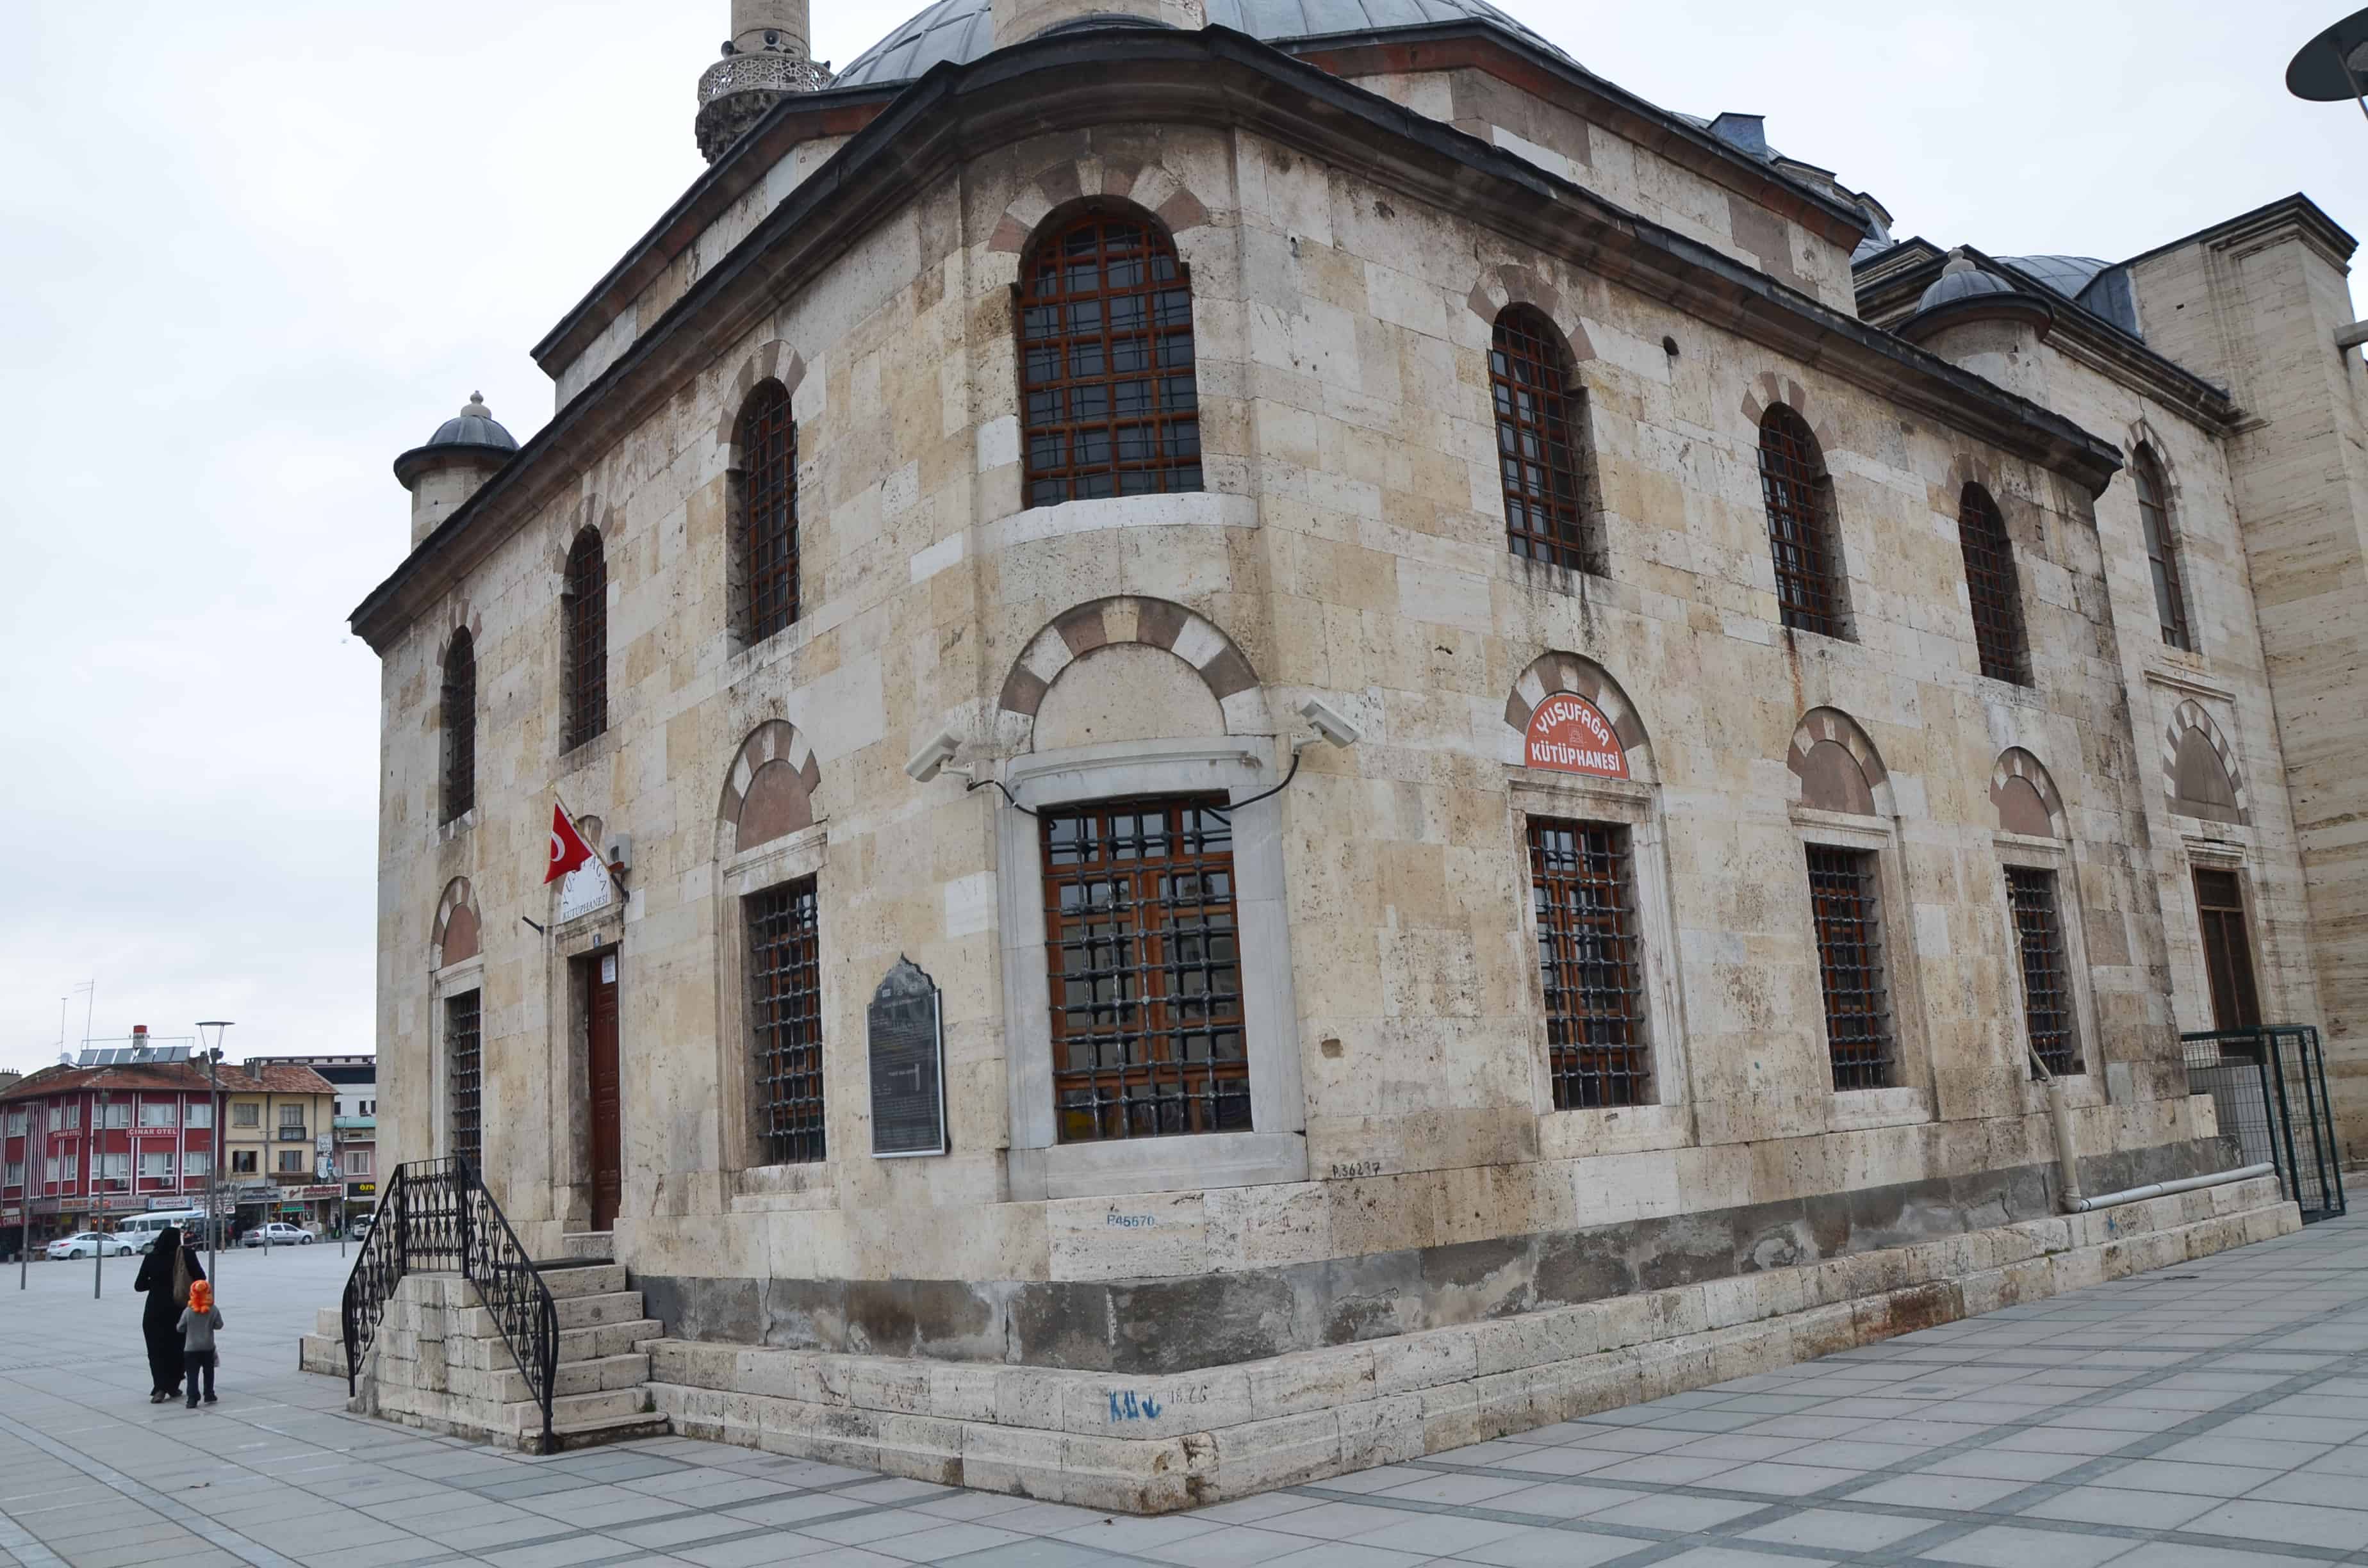 Yusuf Ağa Library in Konya, Turkey